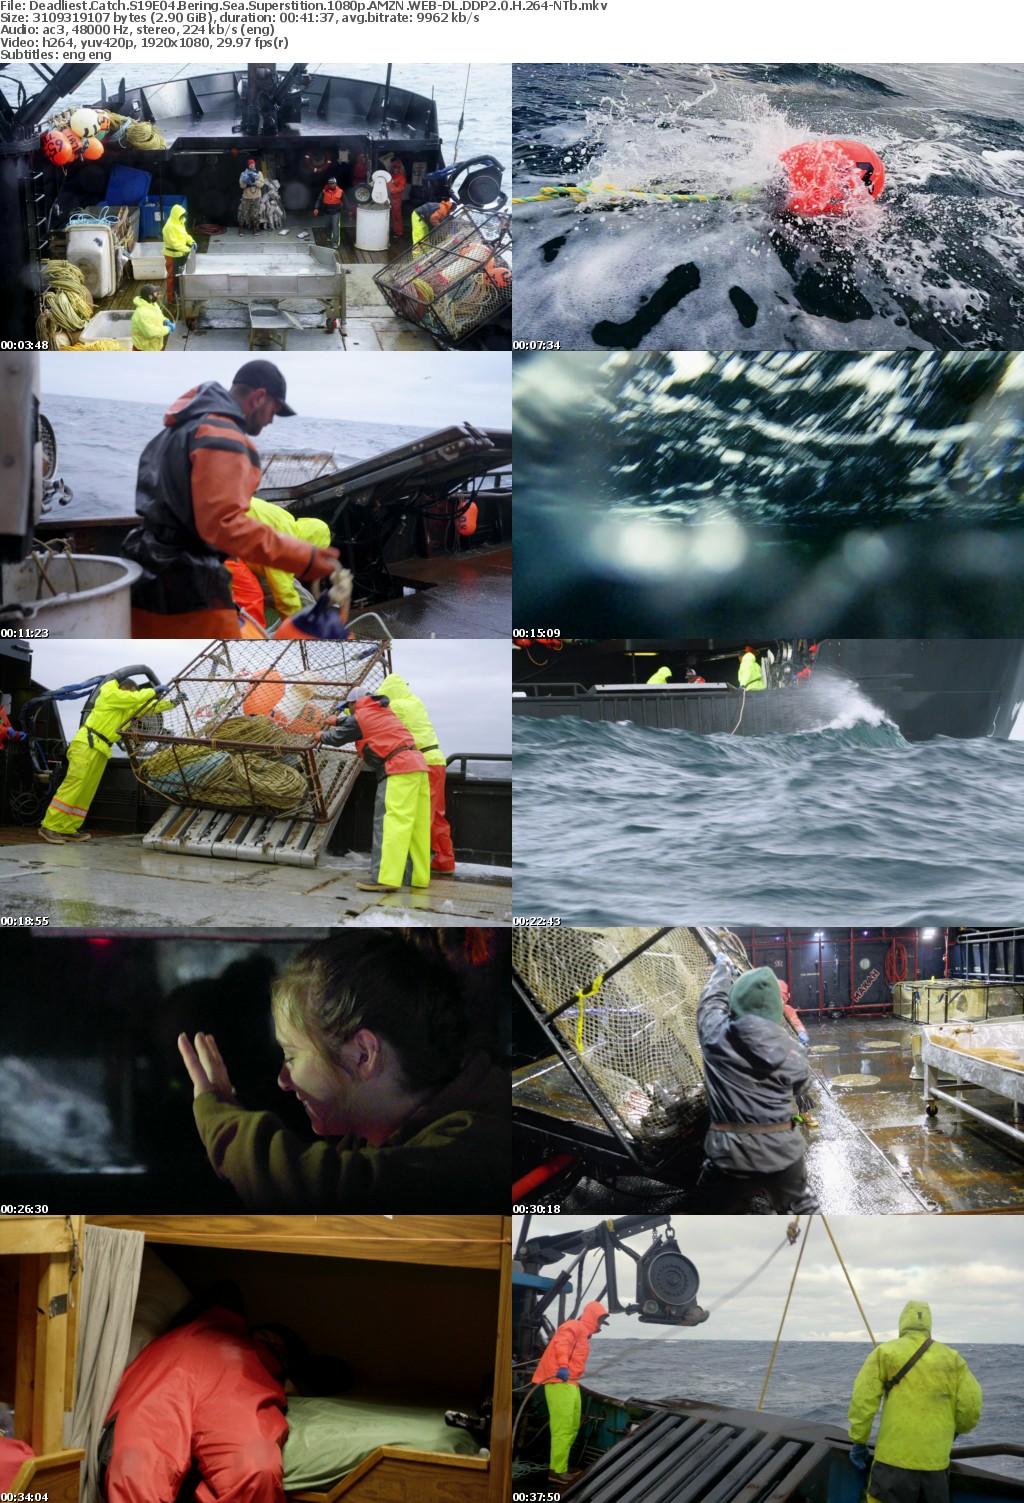 Deadliest Catch S19E04 Bering Sea Superstition 1080p AMZN WEB-DL DDP2 0 H 264-NTb